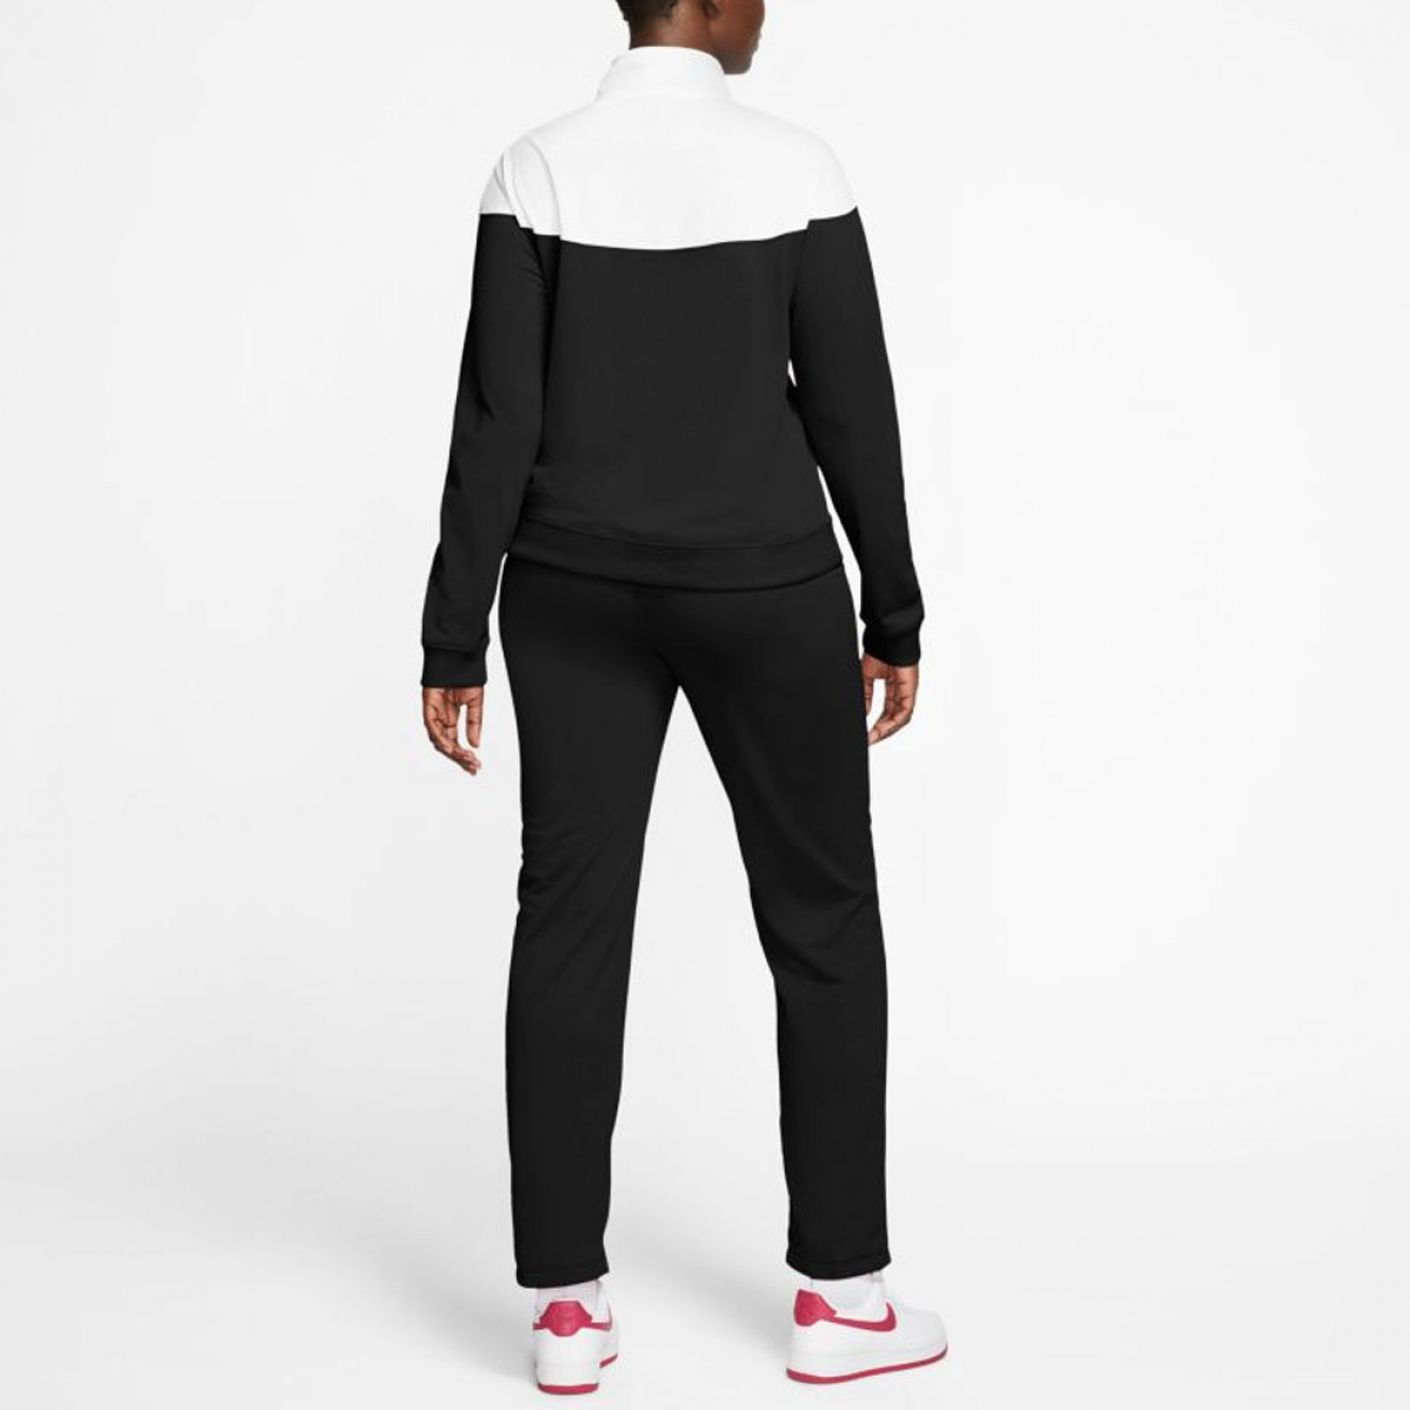 Nike Sportswear Women's Black White Black Tracksuit